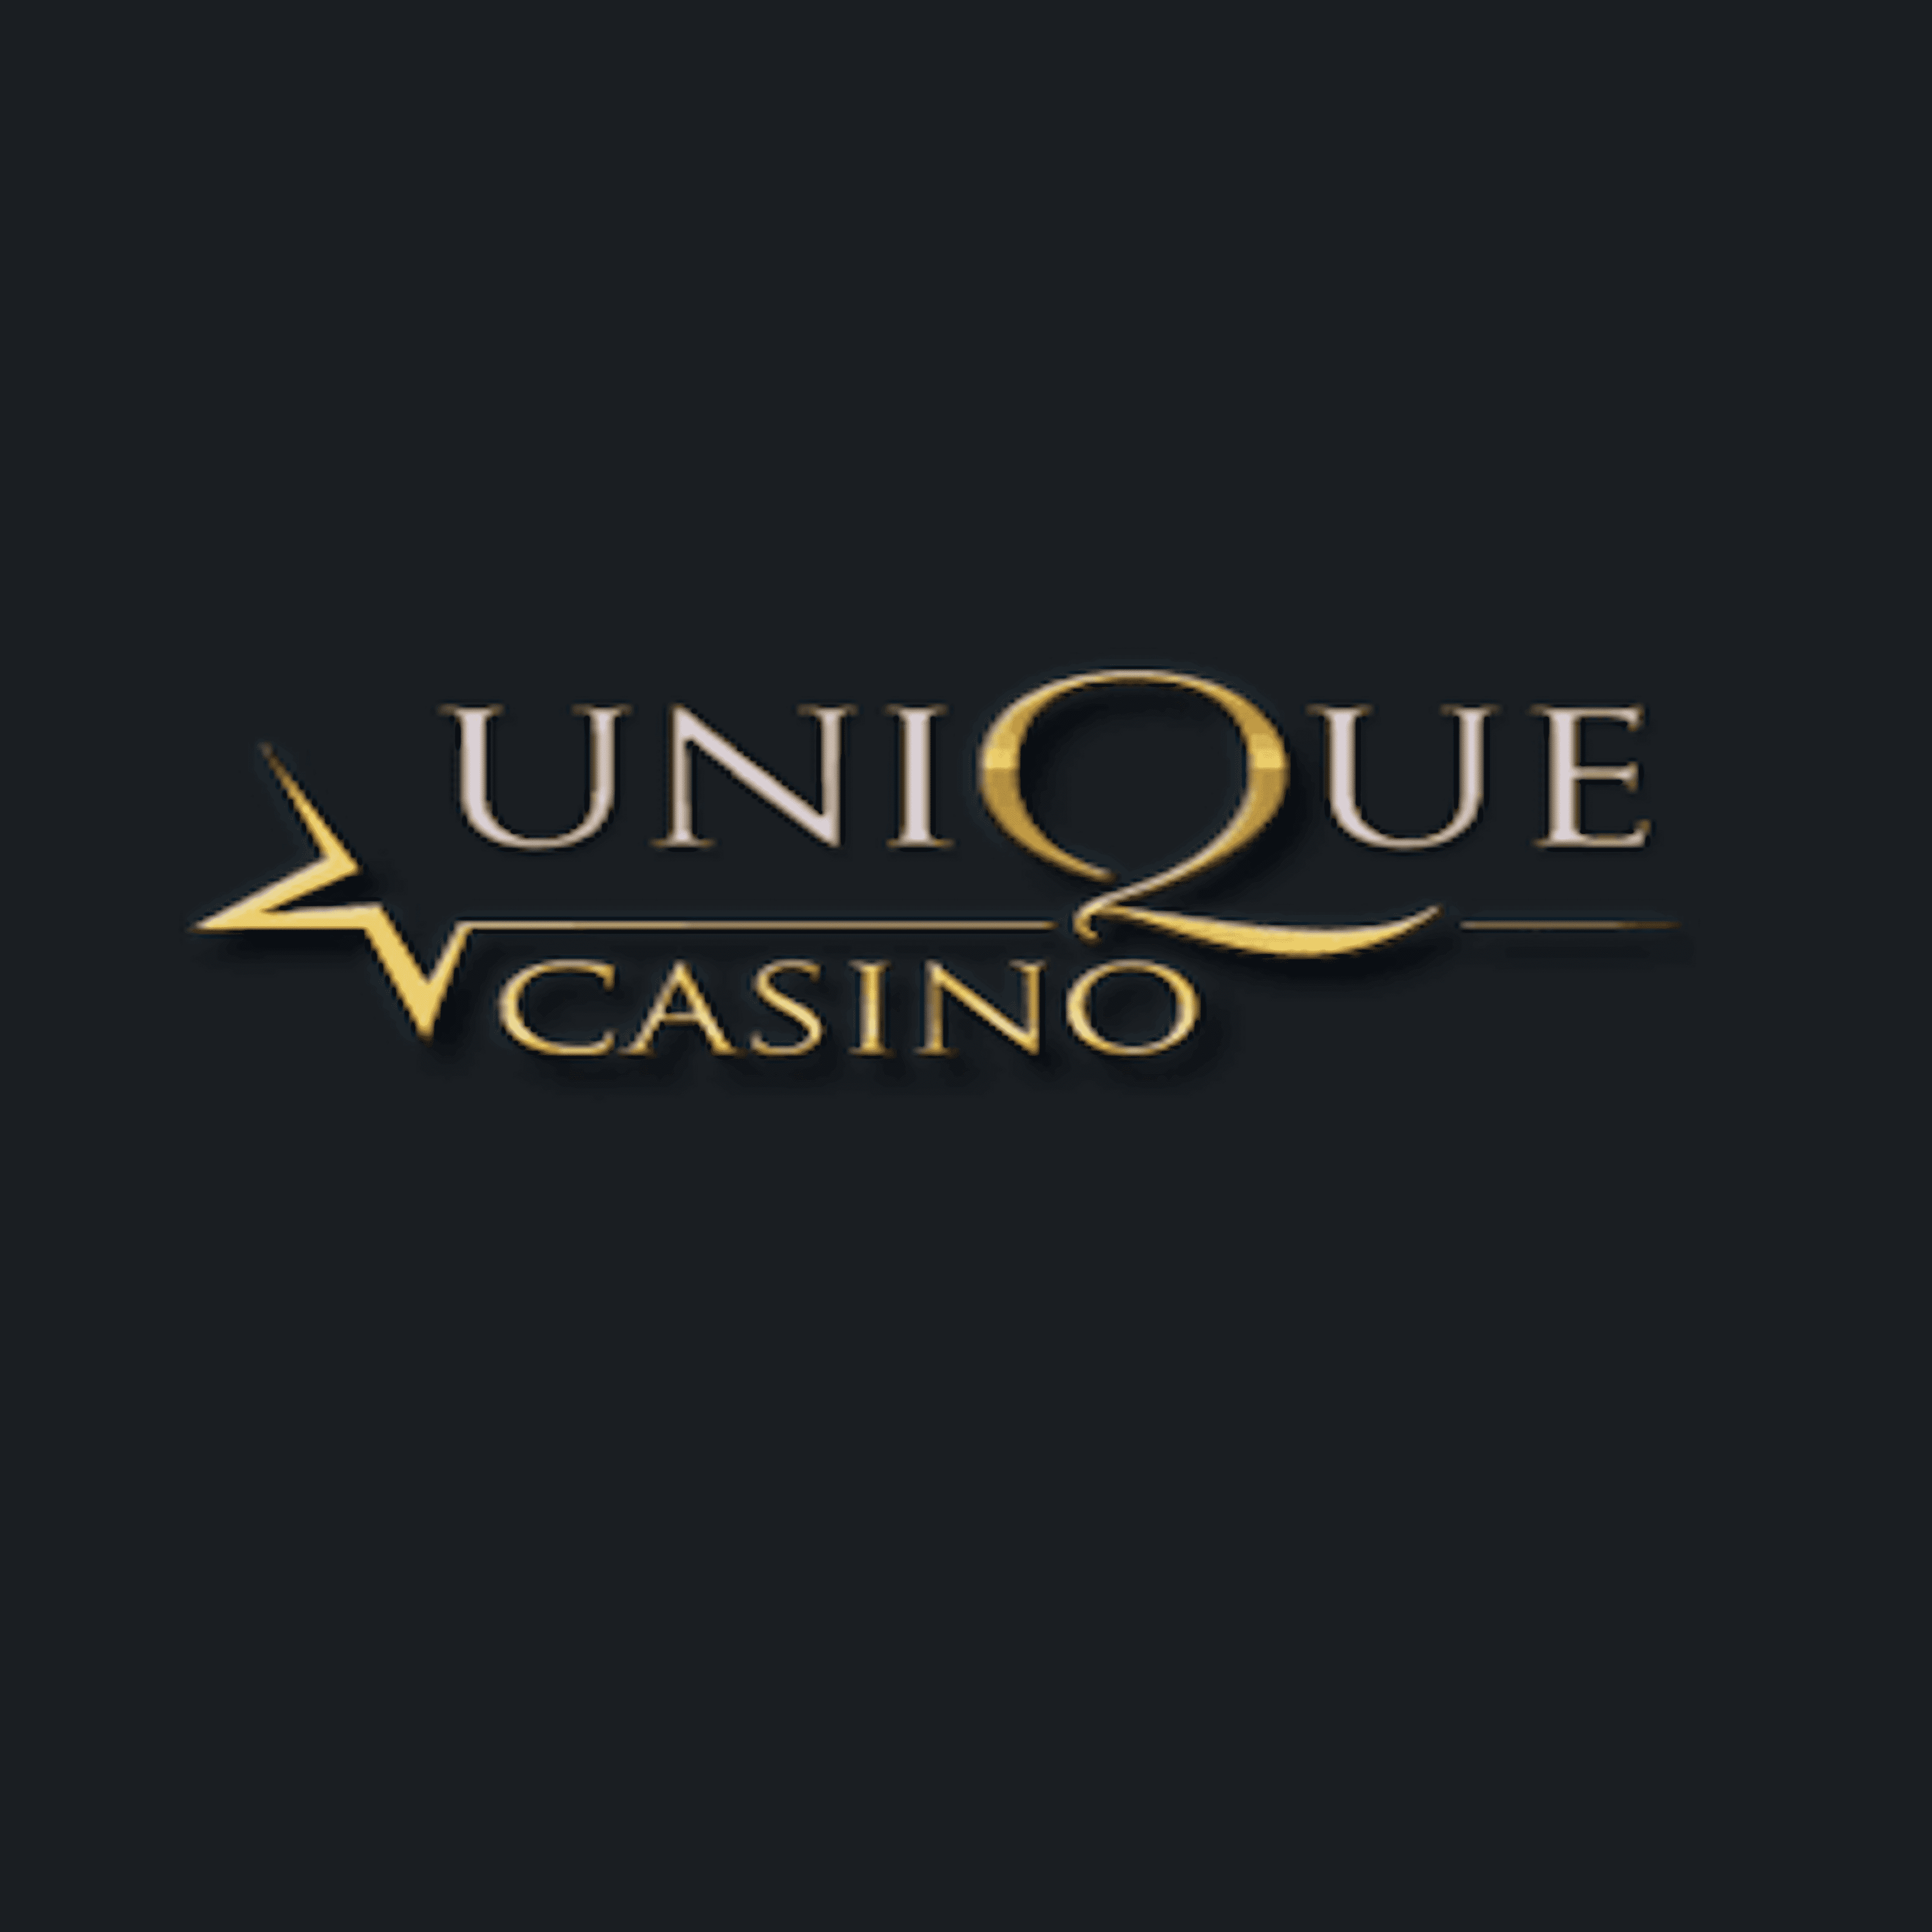 mgm casino logo